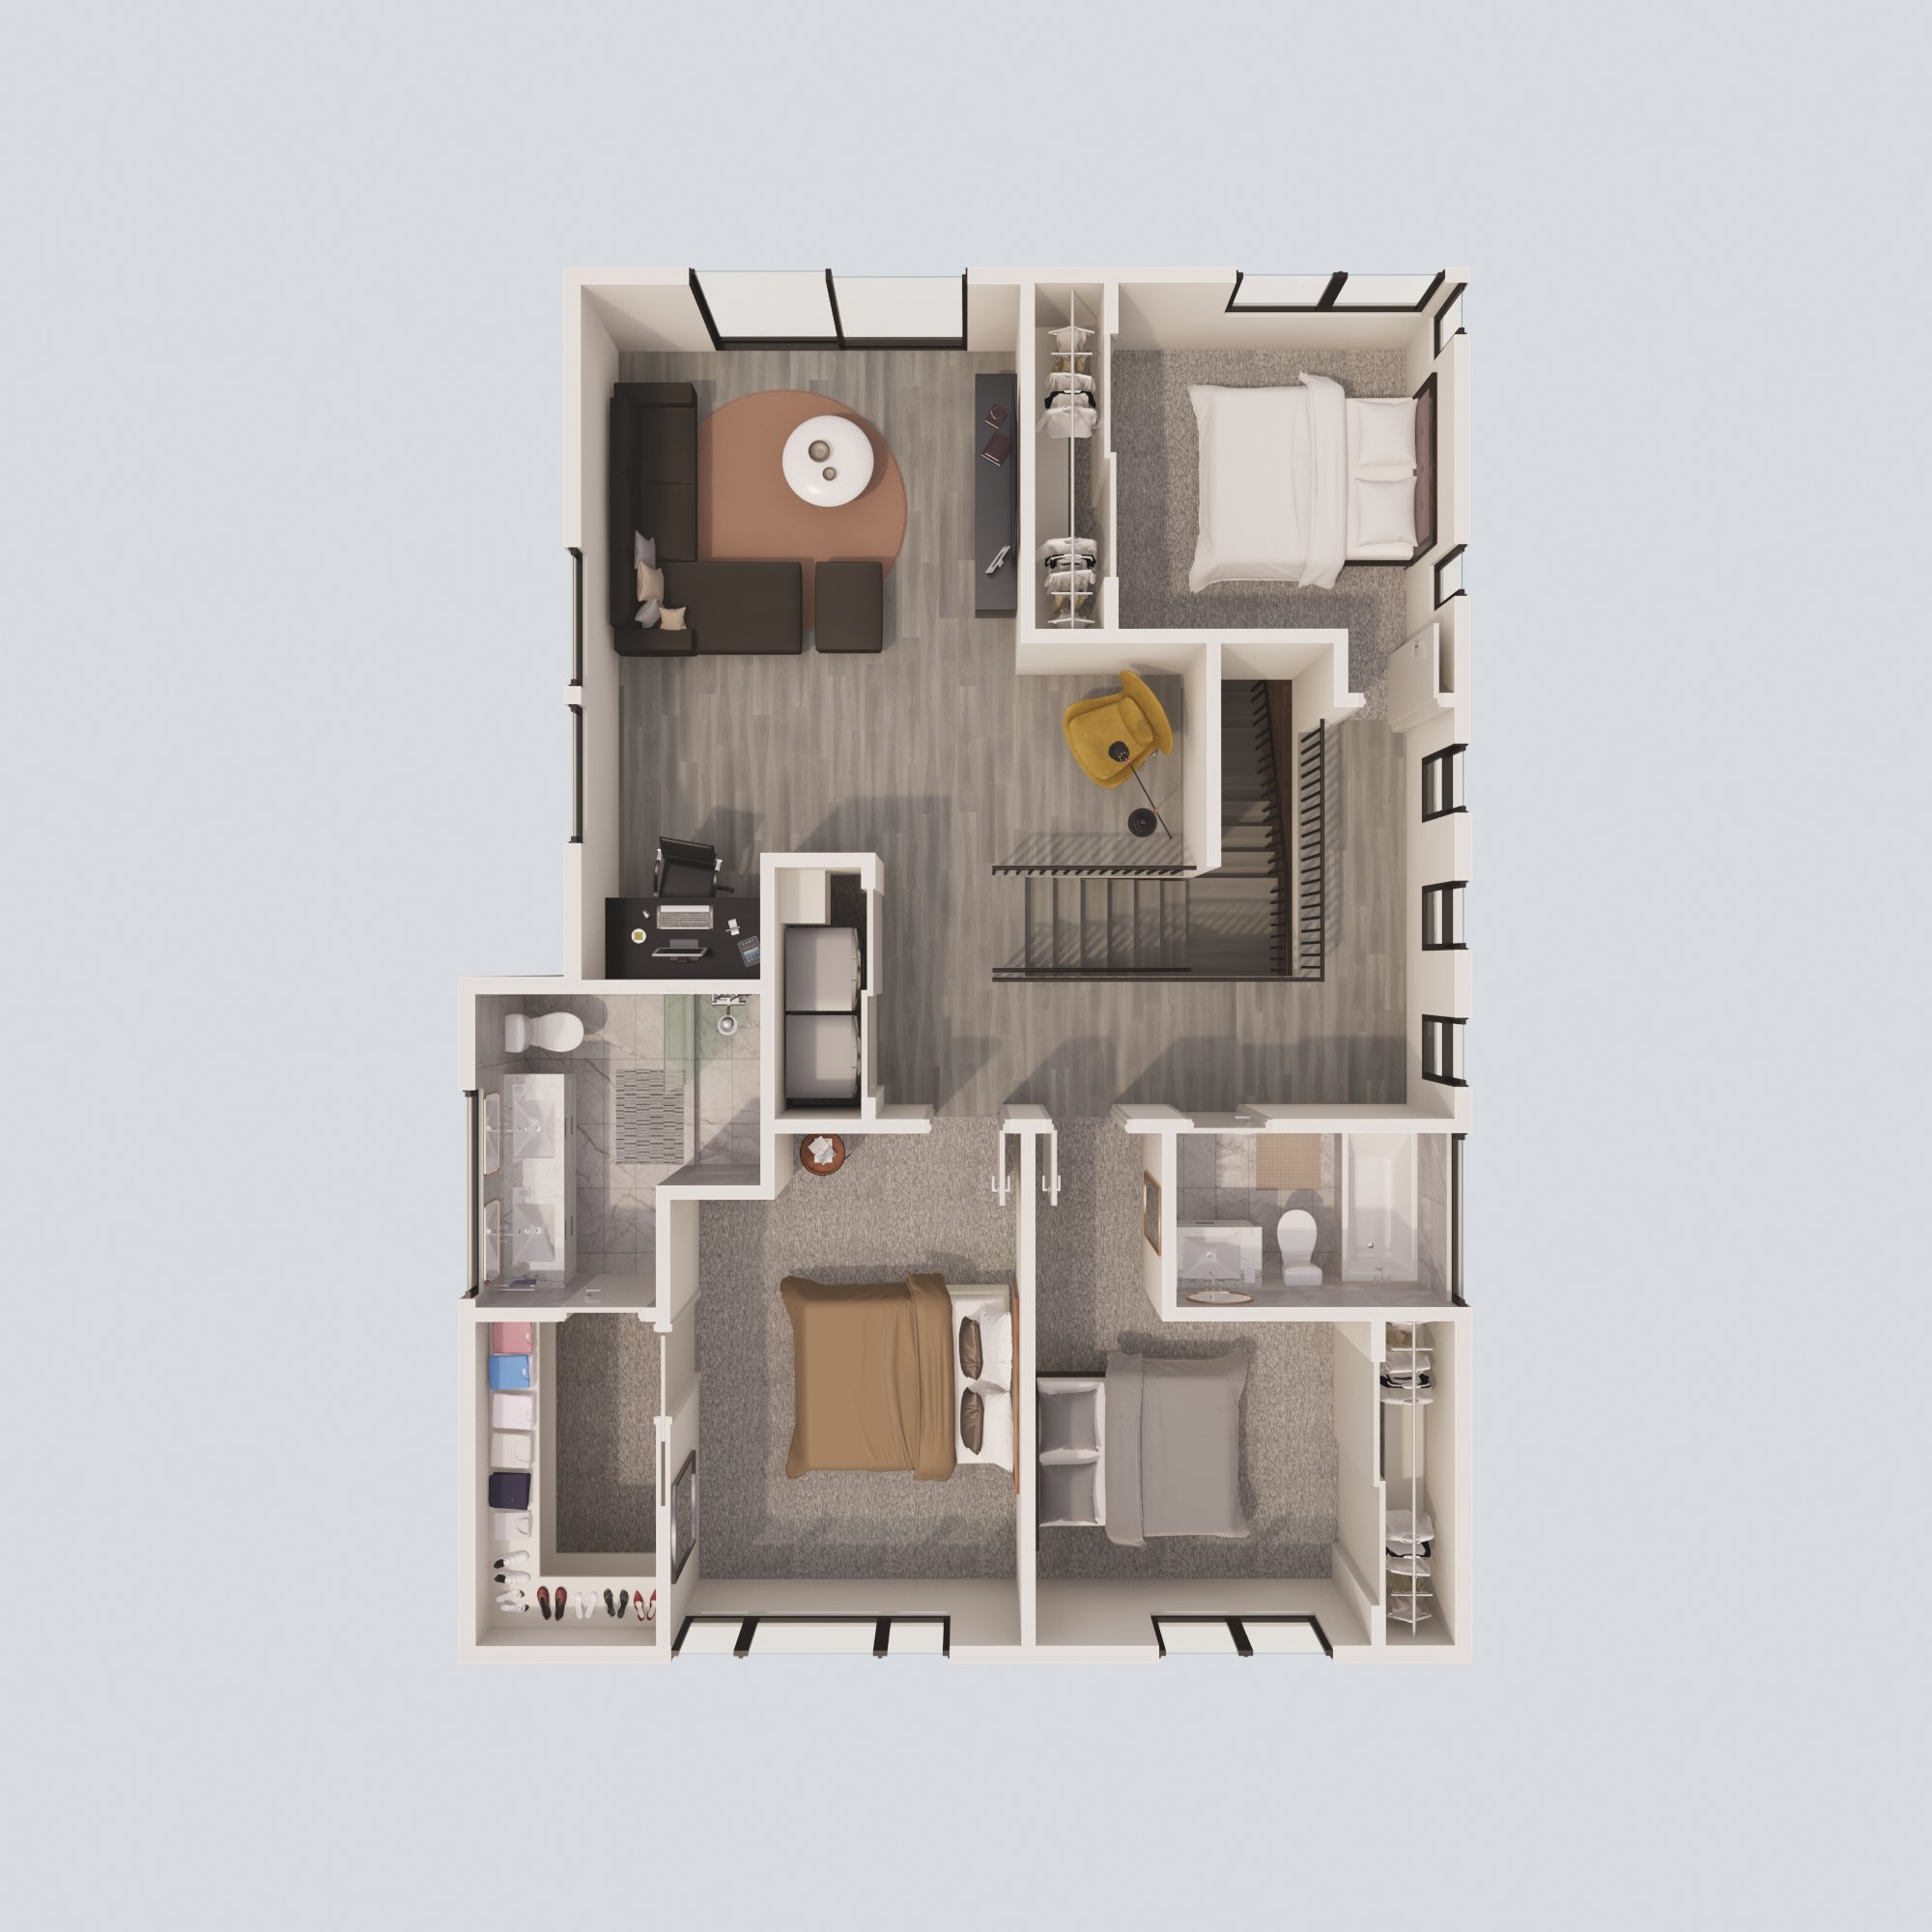 Plan A - Second Floor